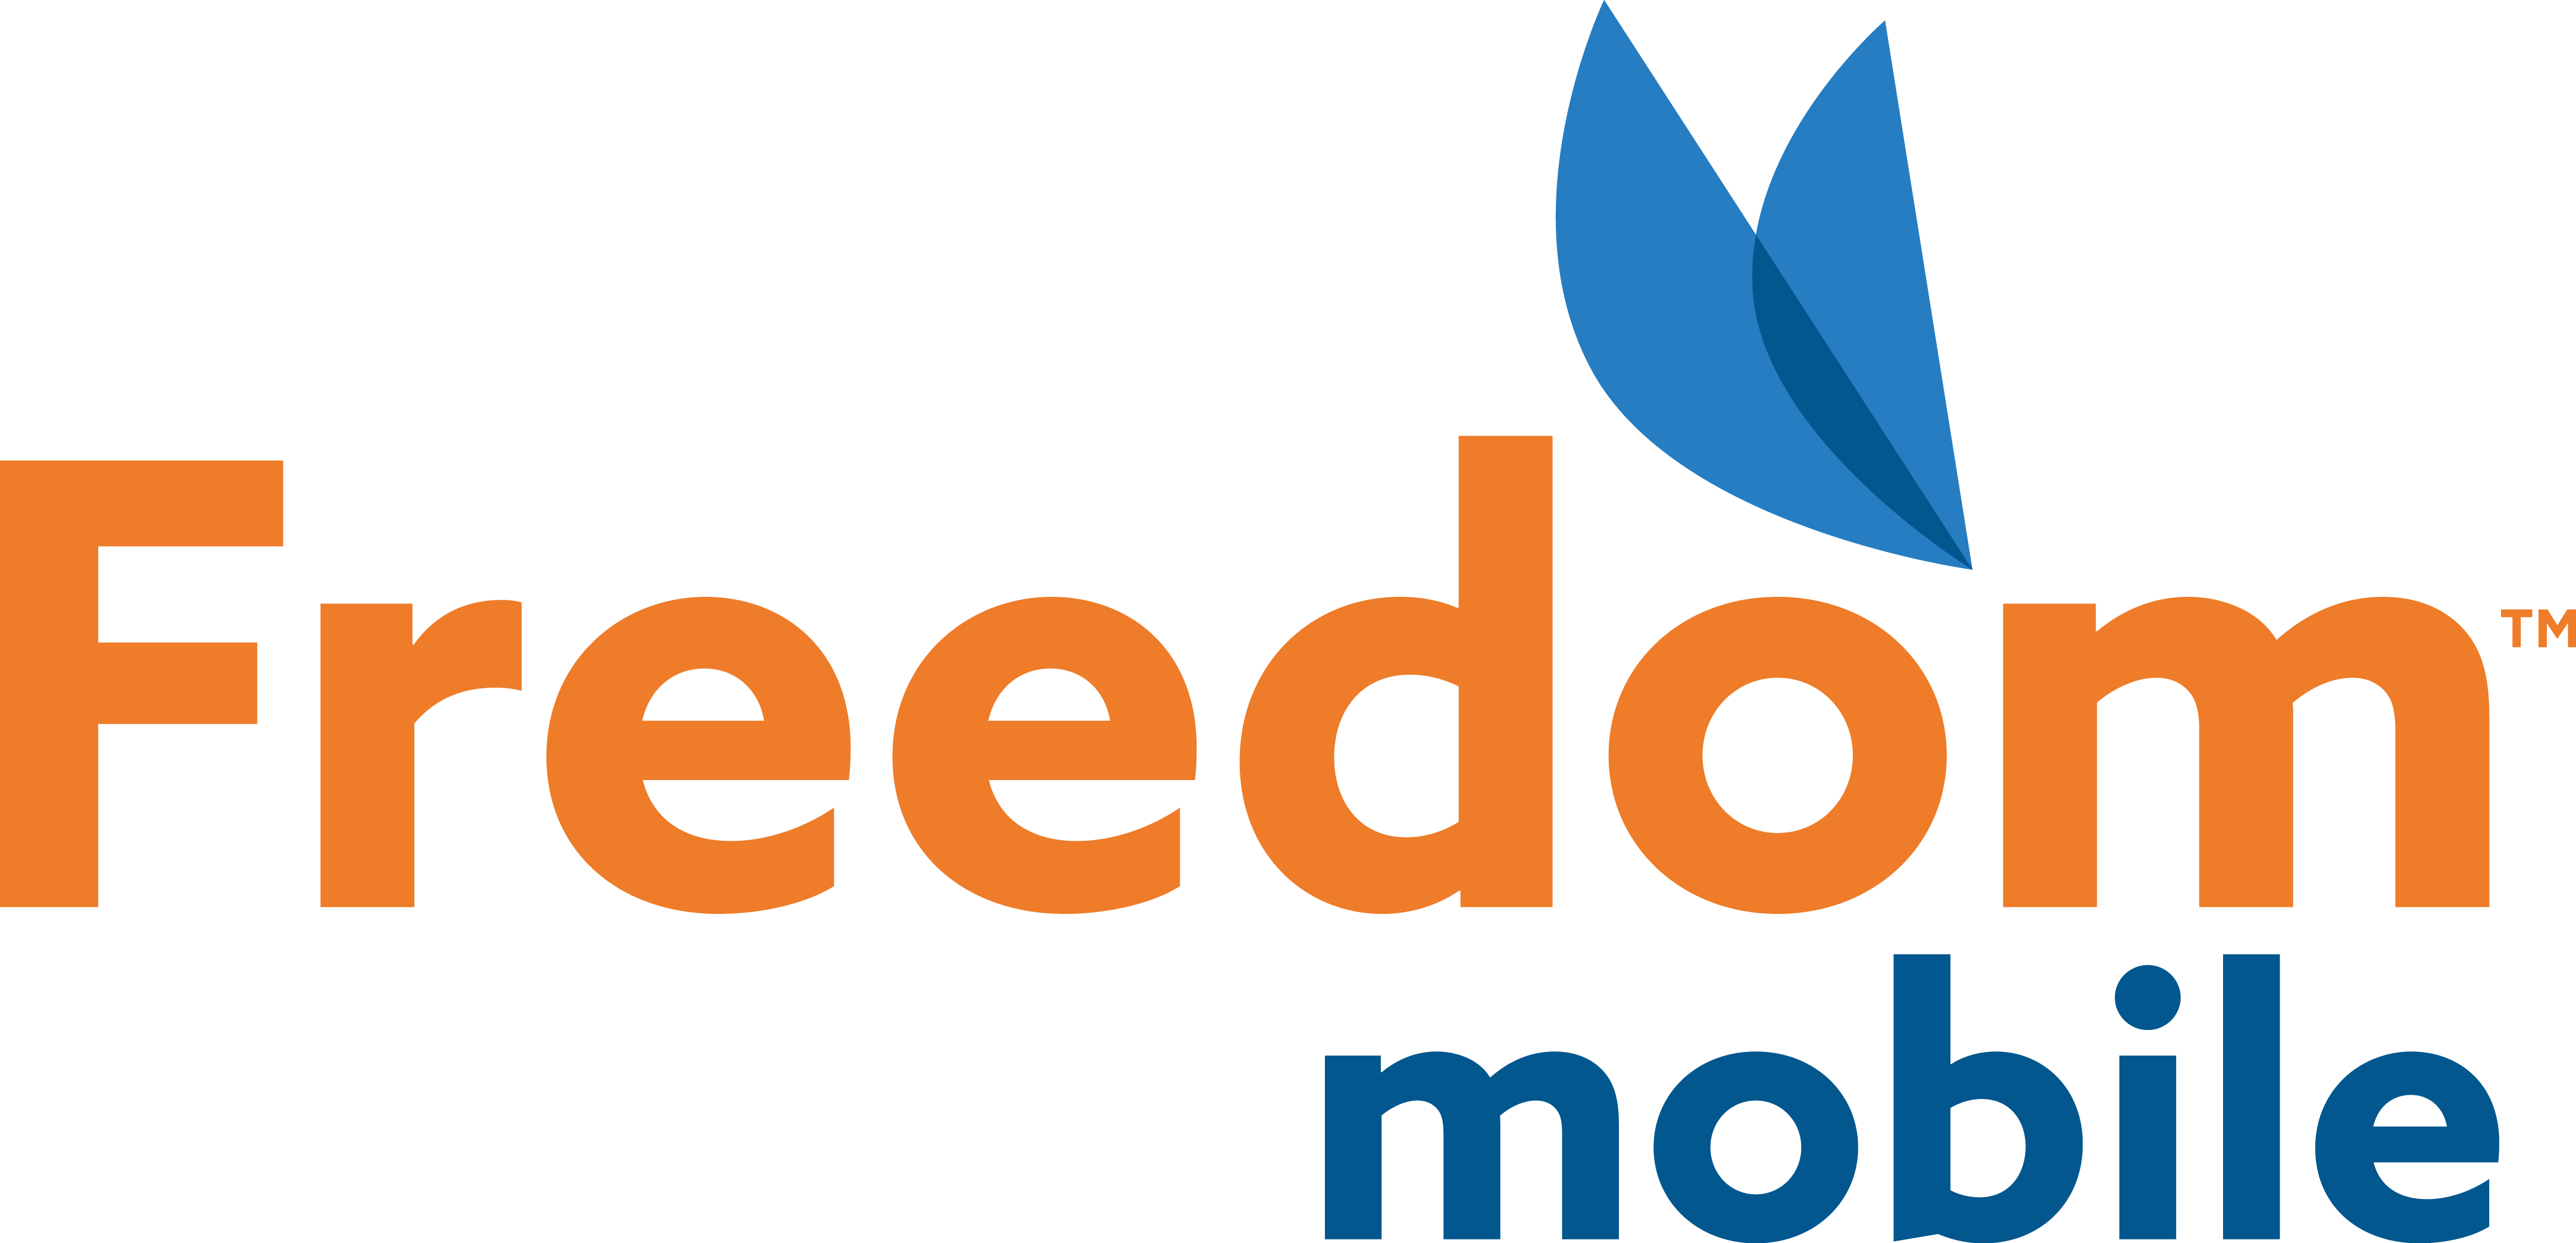 www.freedommobile.ca